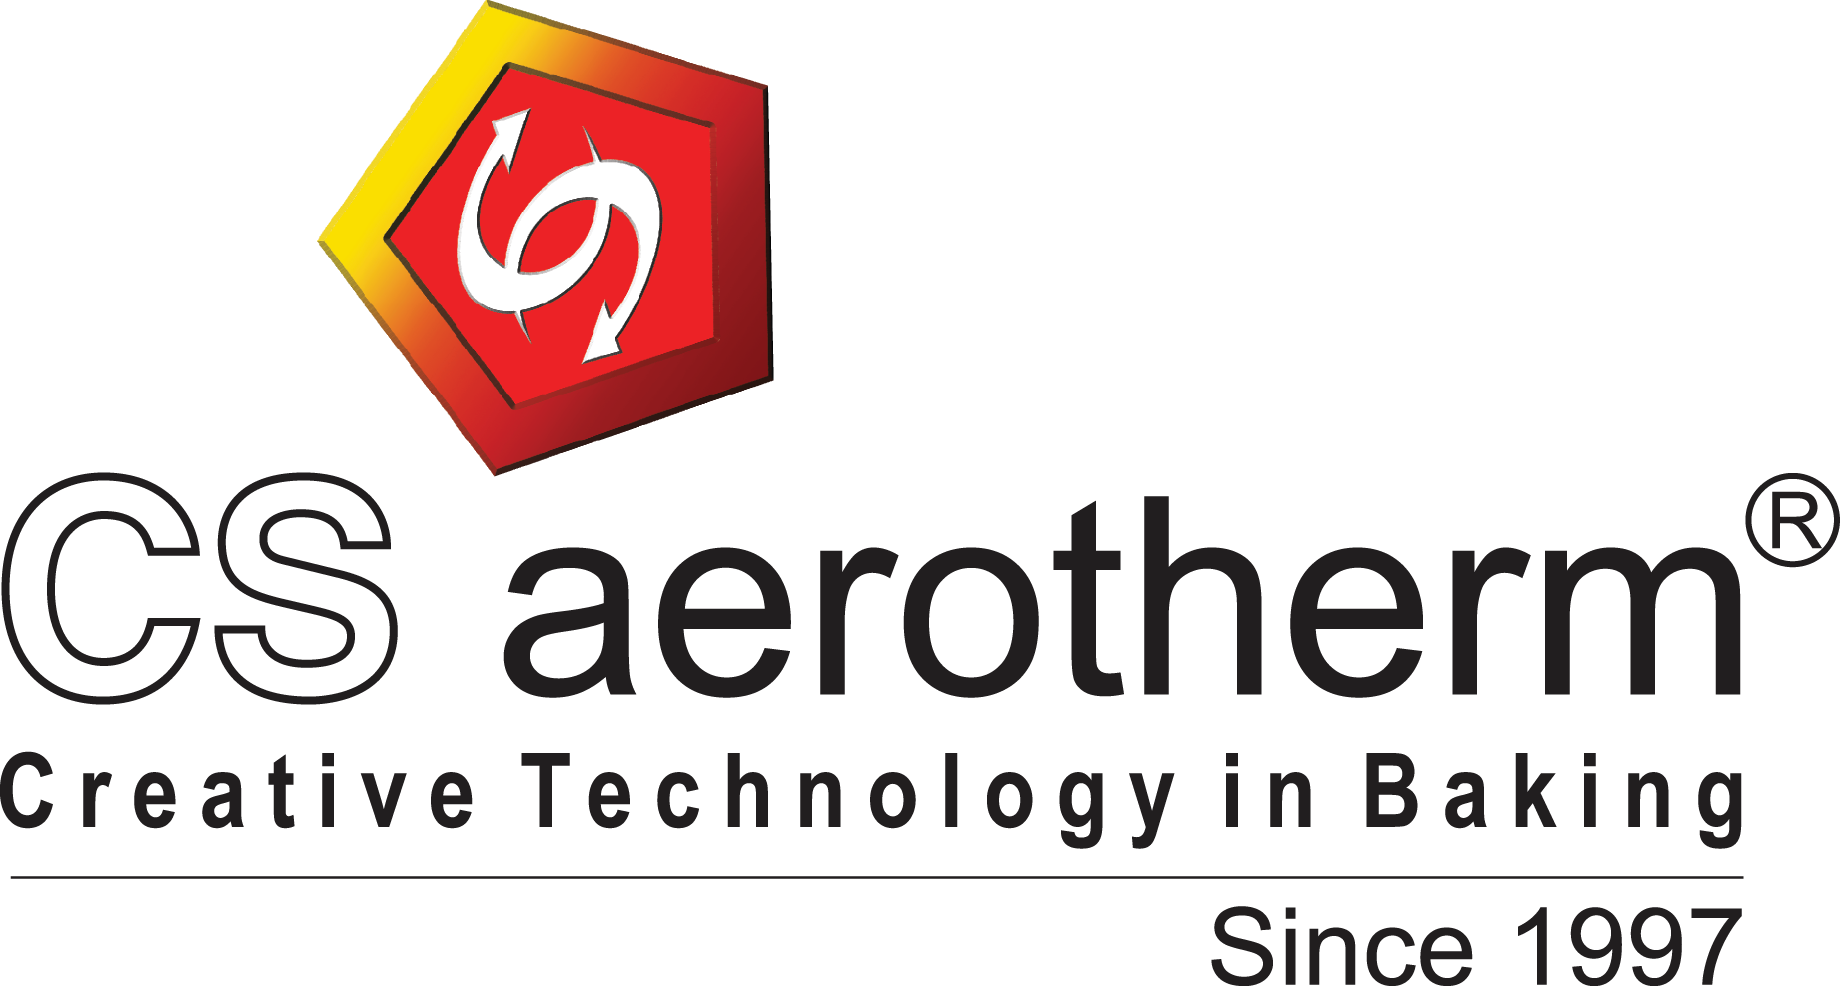 Brand: CS aerotherm